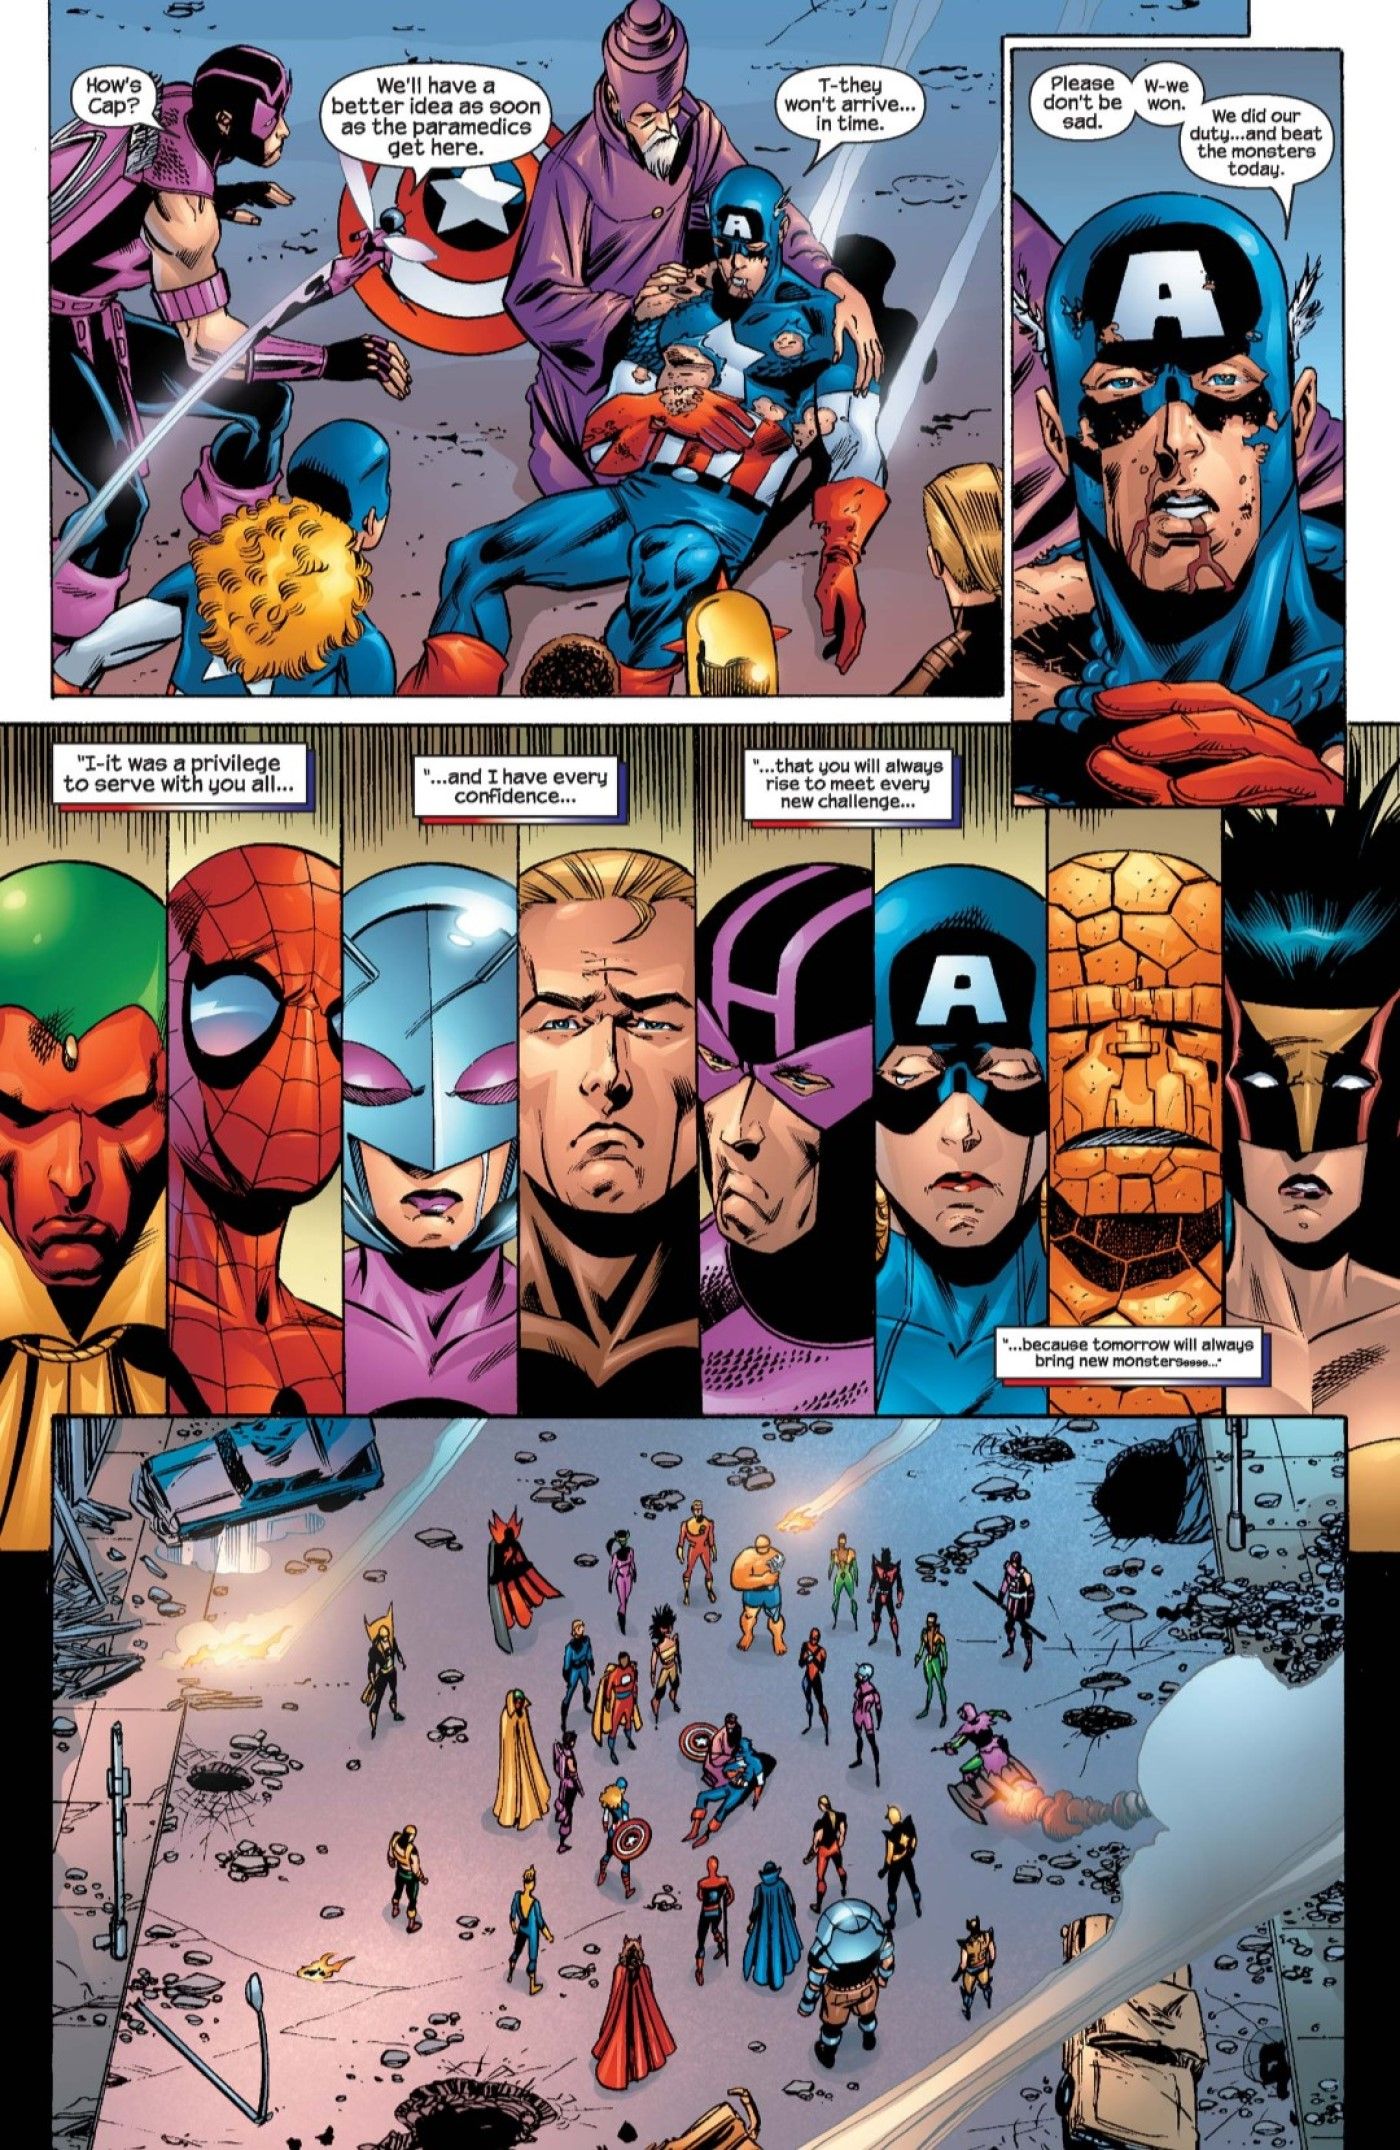 Captain America's death in Last Hero Standing